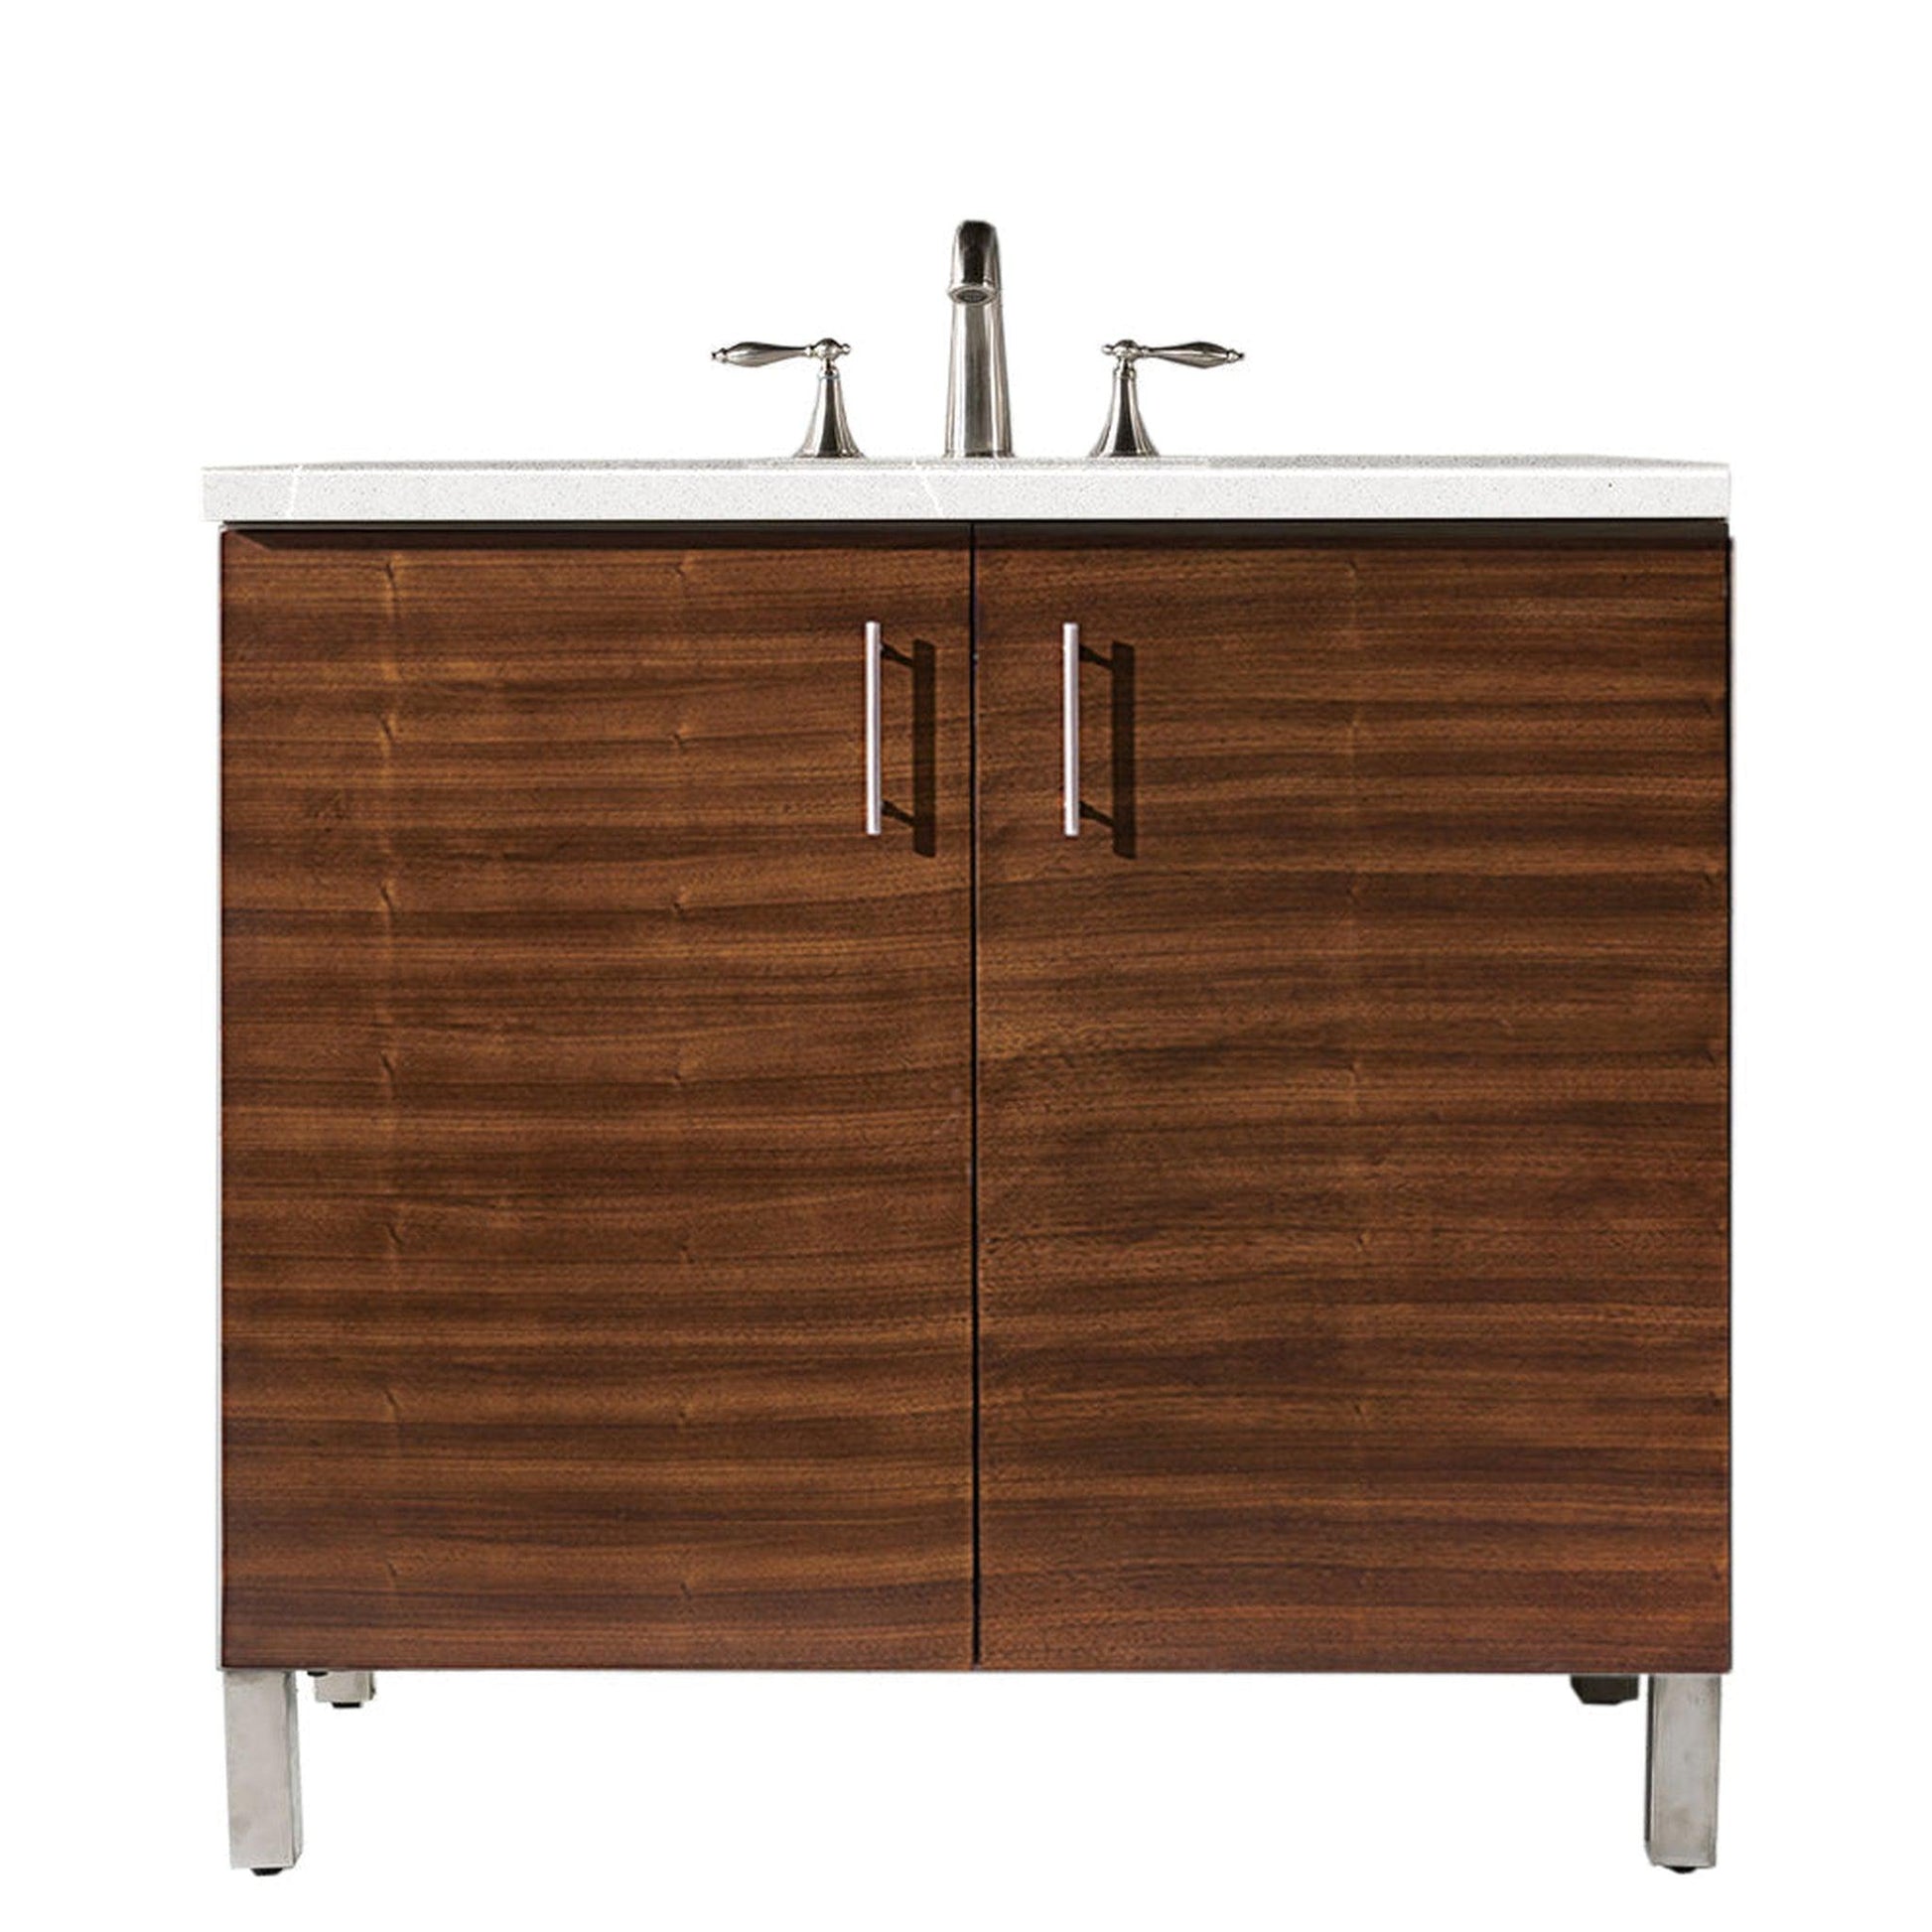 James Martin Metropolitan 36" Single American Walnut Bathroom Vanity With 1" Eternal Serena Quartz Top and Rectangular Ceramic Sink